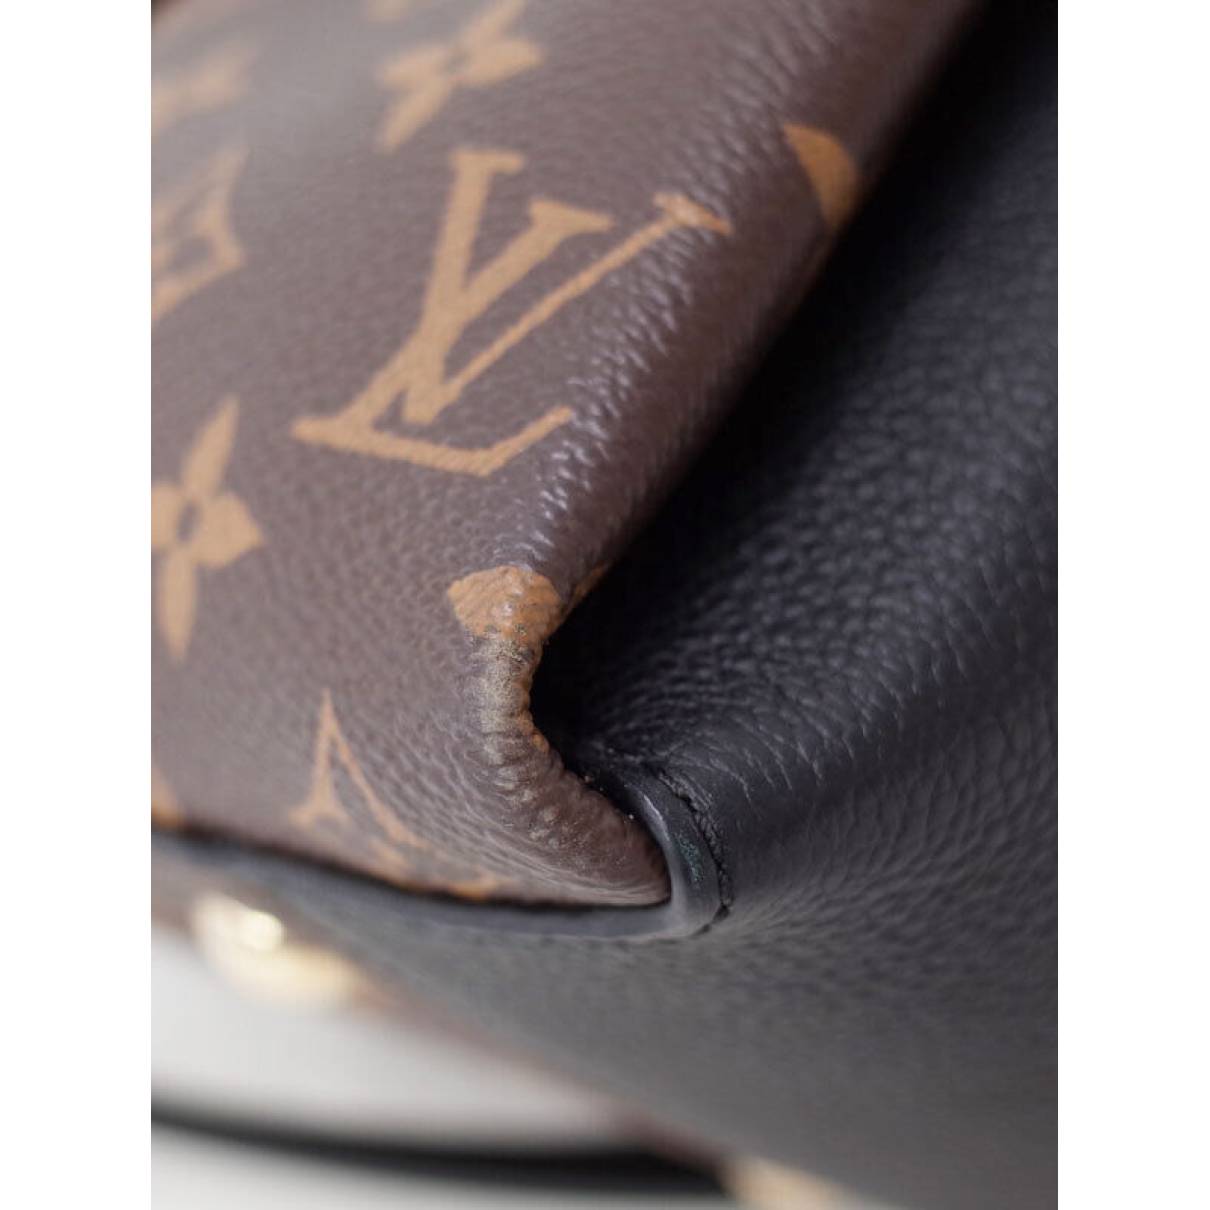 Louis Vuitton Soufflot MM Satchel Brown Monogram Black Noir Shoulder Handbag